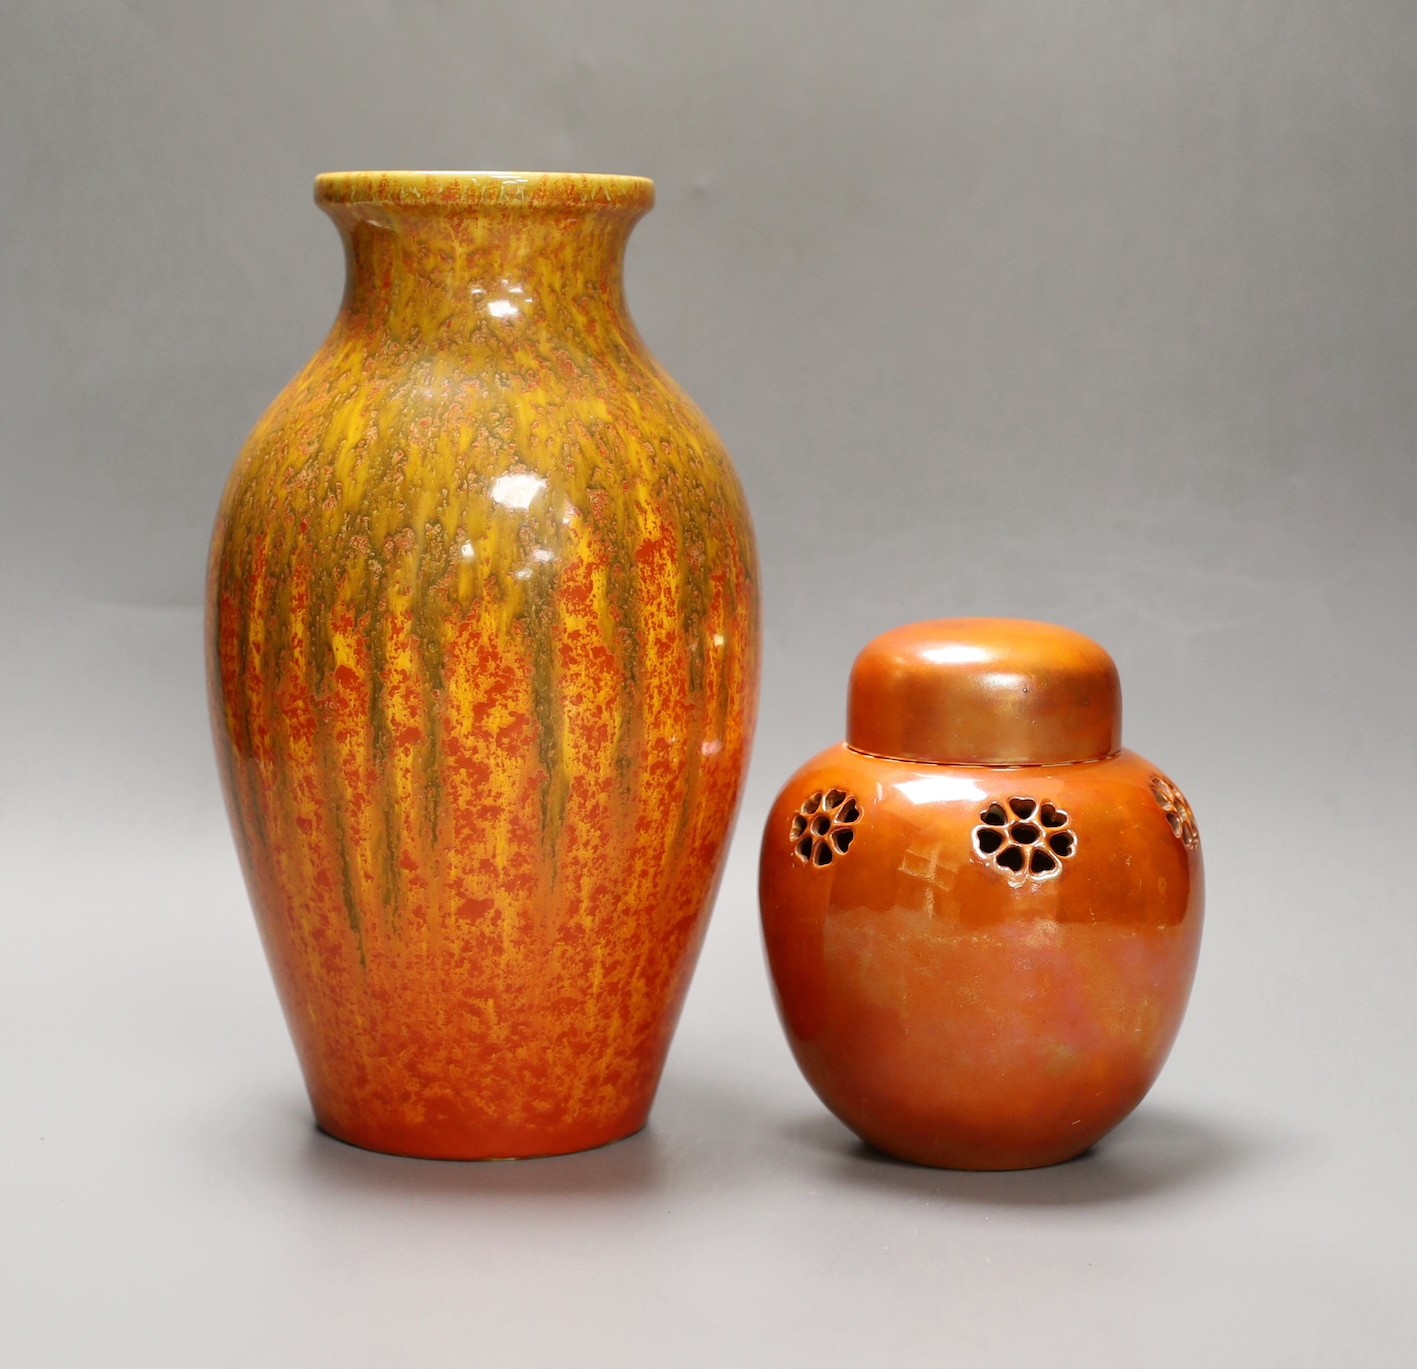 A Pilkington‘s Royal Lancastrian mottled orange ground vase and a Ruskin Orange lustre jar and cover, dated 1914, tallest 25cm